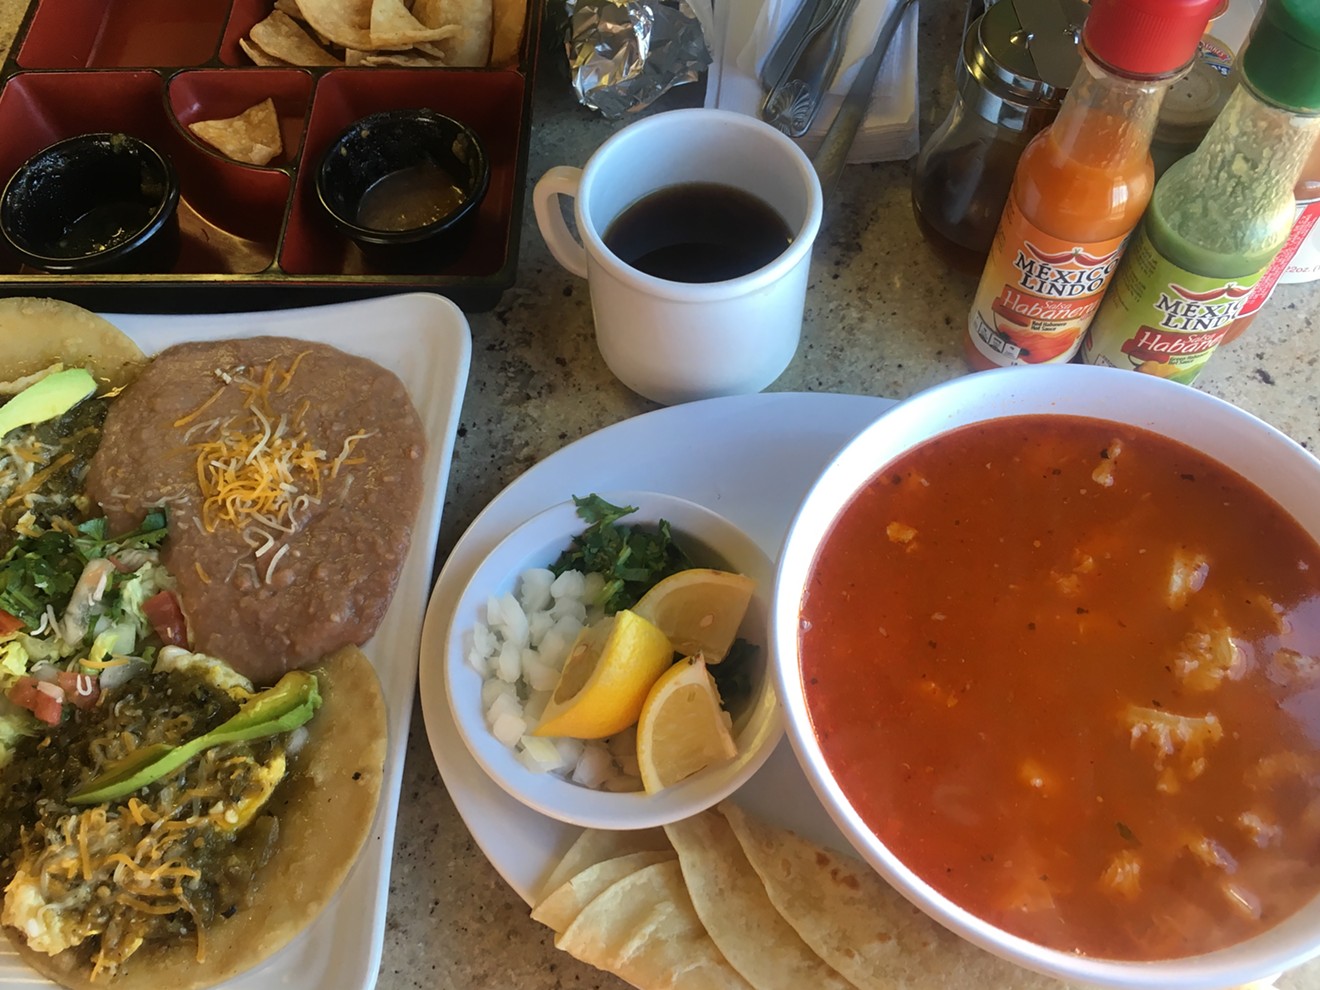 A Mexican breakfast spread